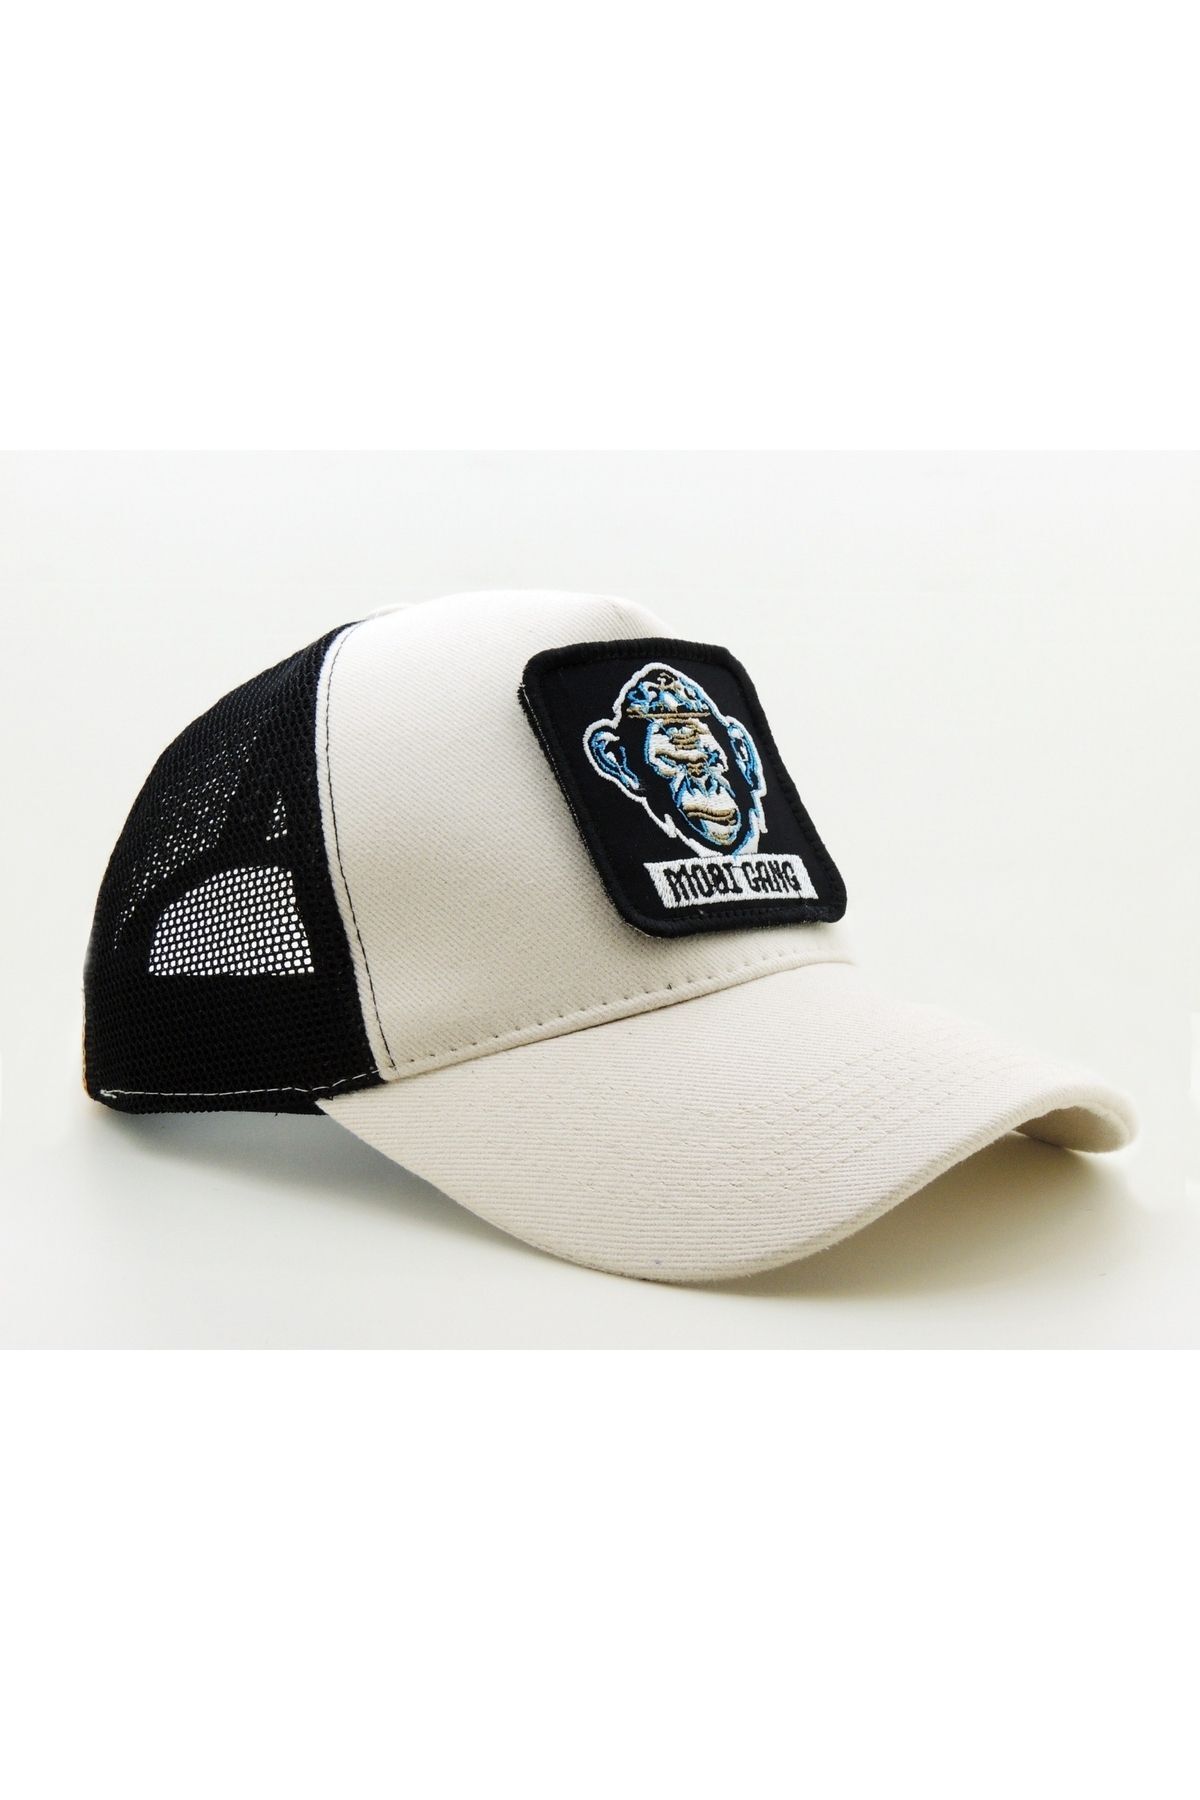 CityGoat Trucker (NAKIŞ) Mobi Gang Logolu Unisex Beyaz-Siyah Şapka (CAP)